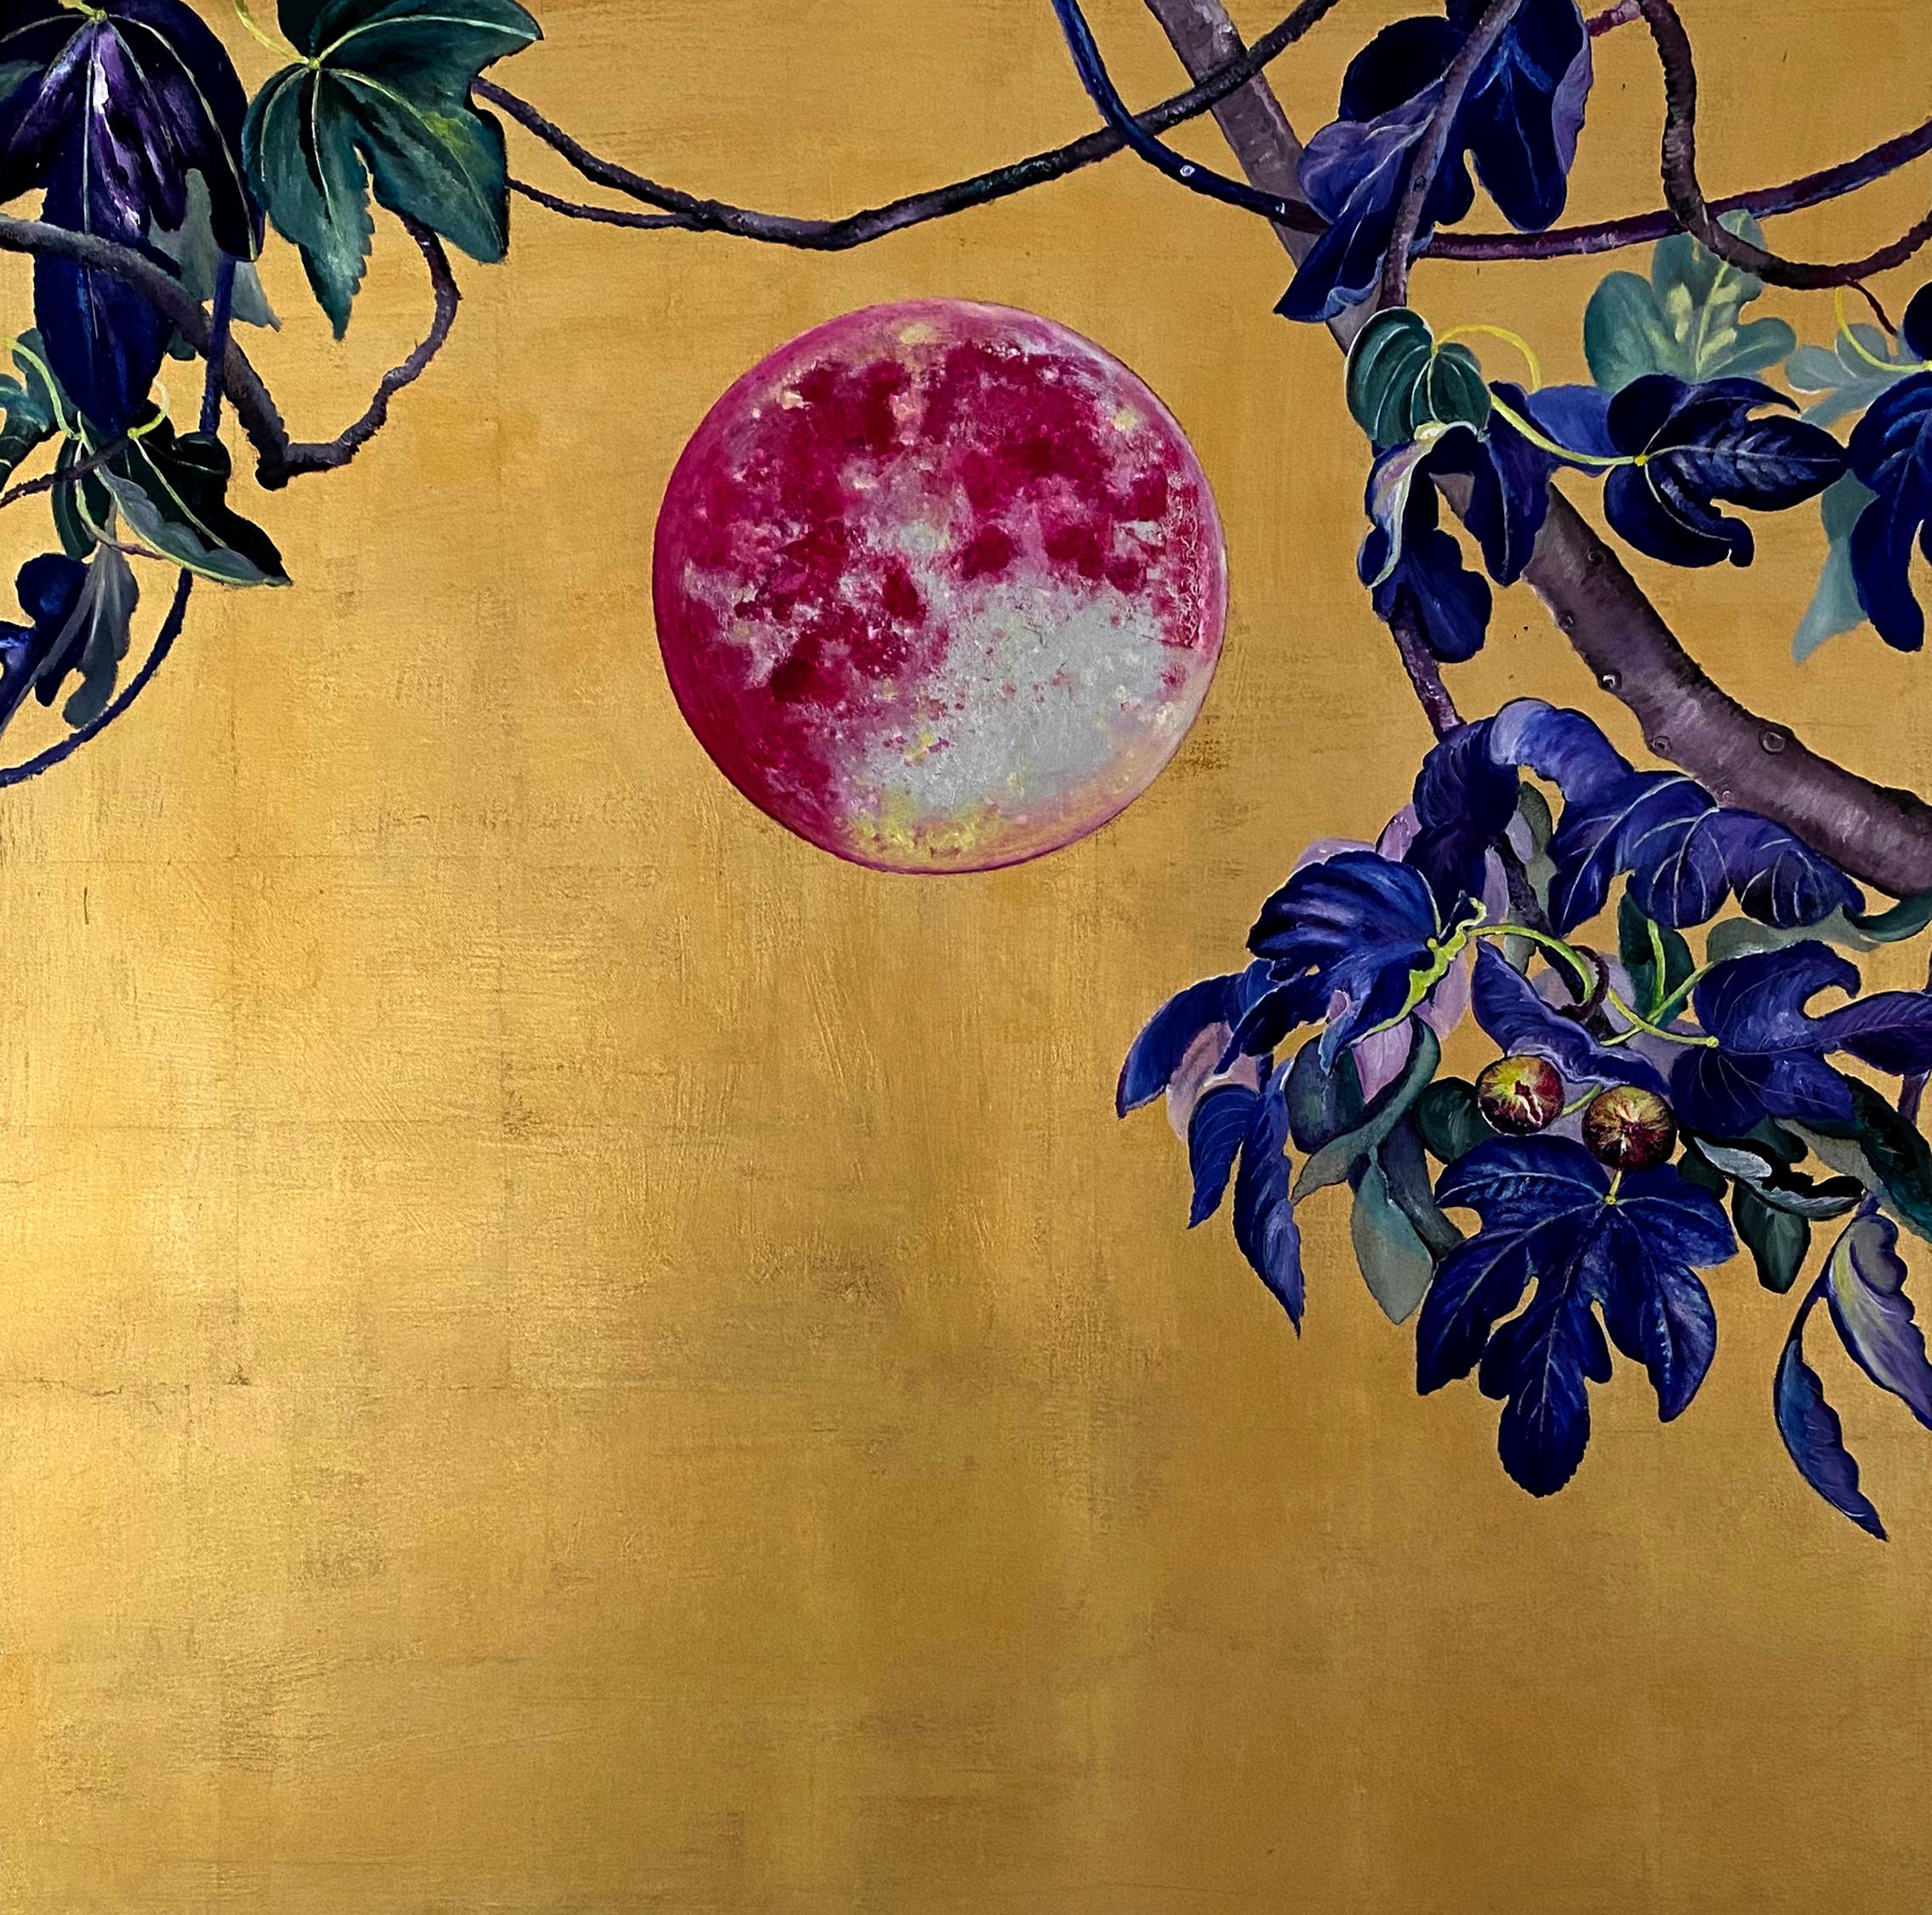 Fig Tree Under the Moon – Ölgemälde und Goldmalerei, abstrakte Naturlandschaft